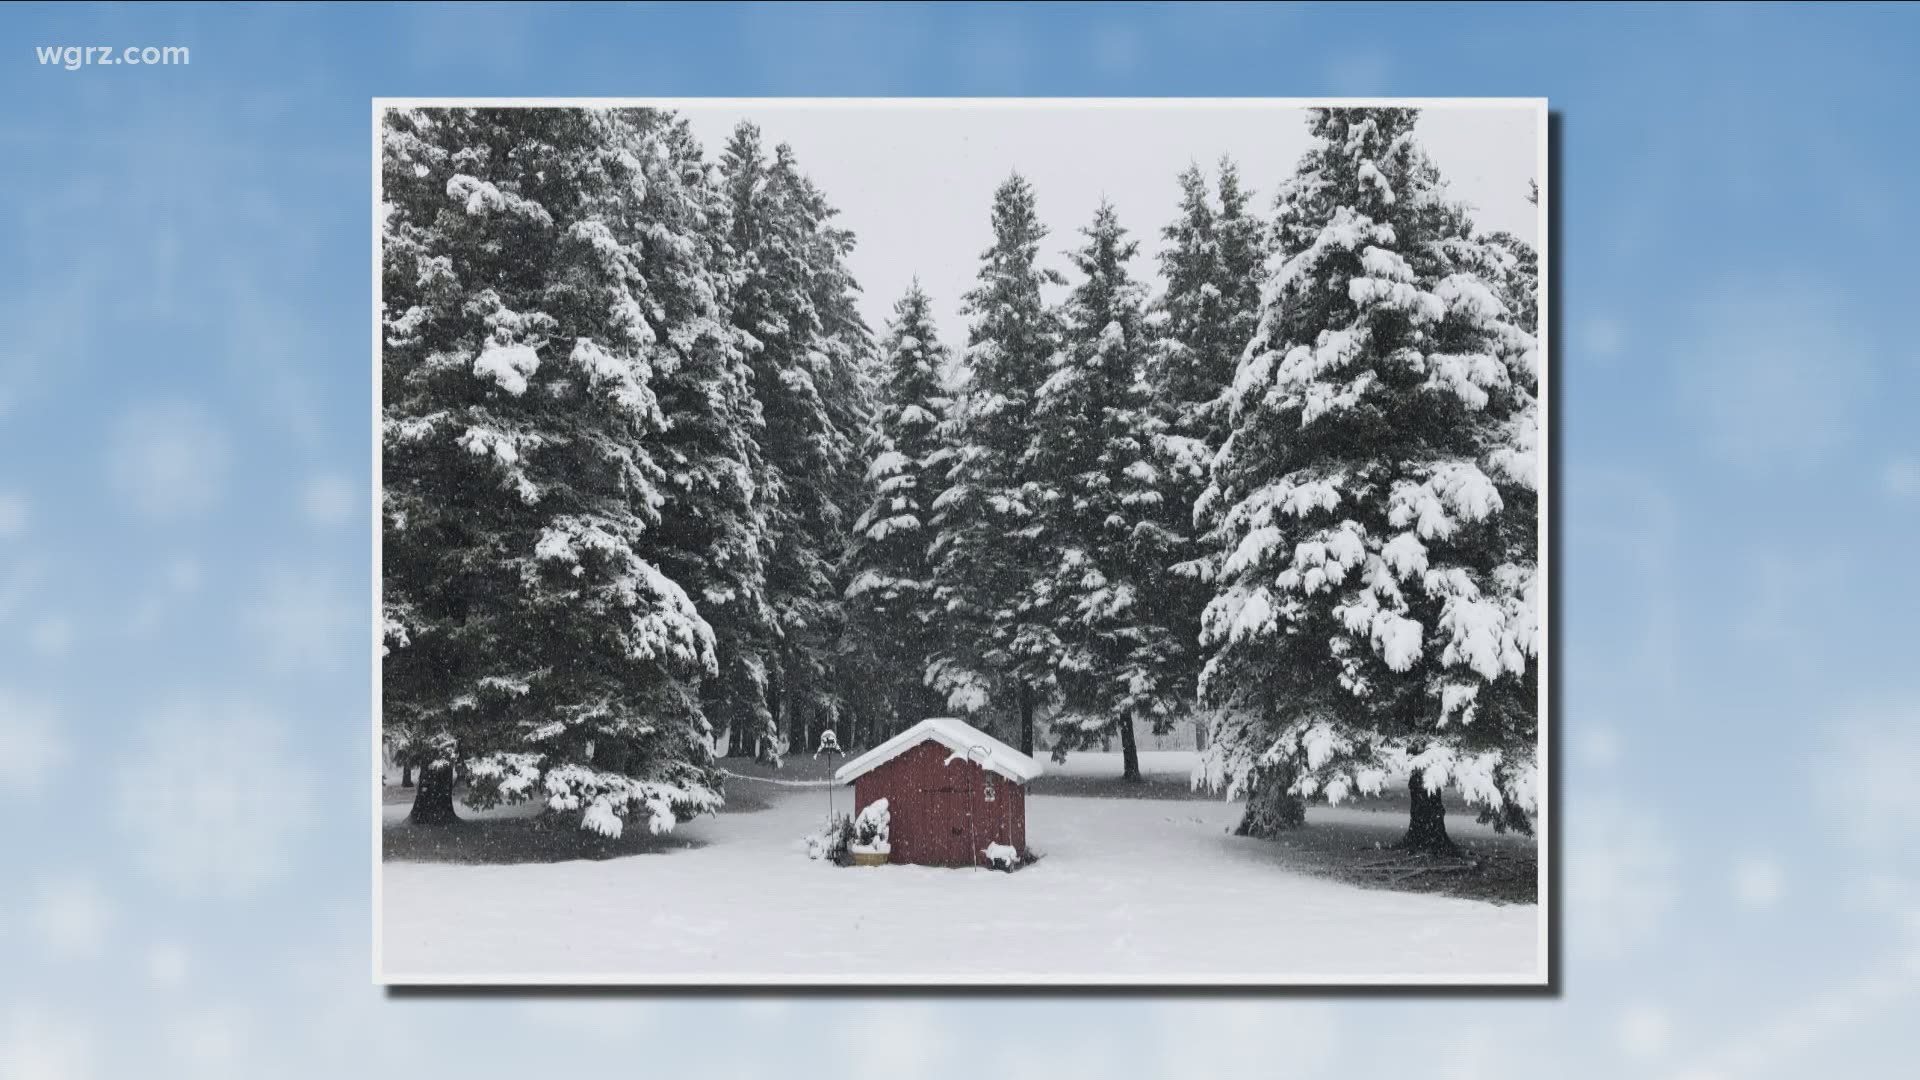 Most Buffalo: 'December 1st snow photo challenge'